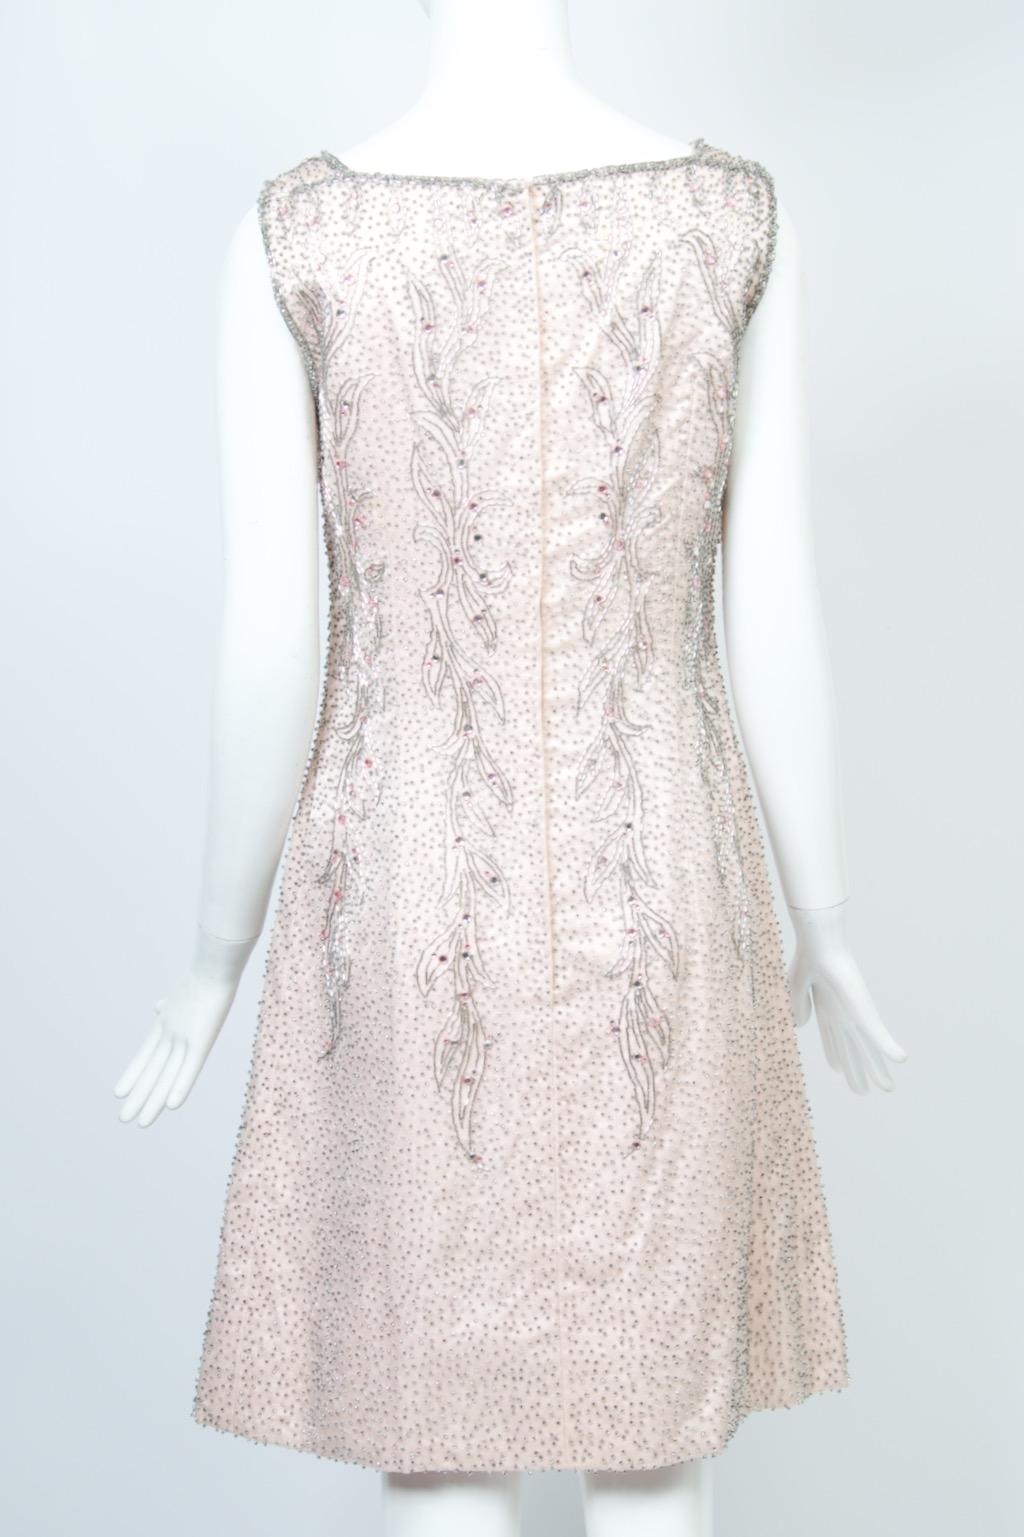 Malcom Starr 1960s Pink Beaded Dress For Sale 1